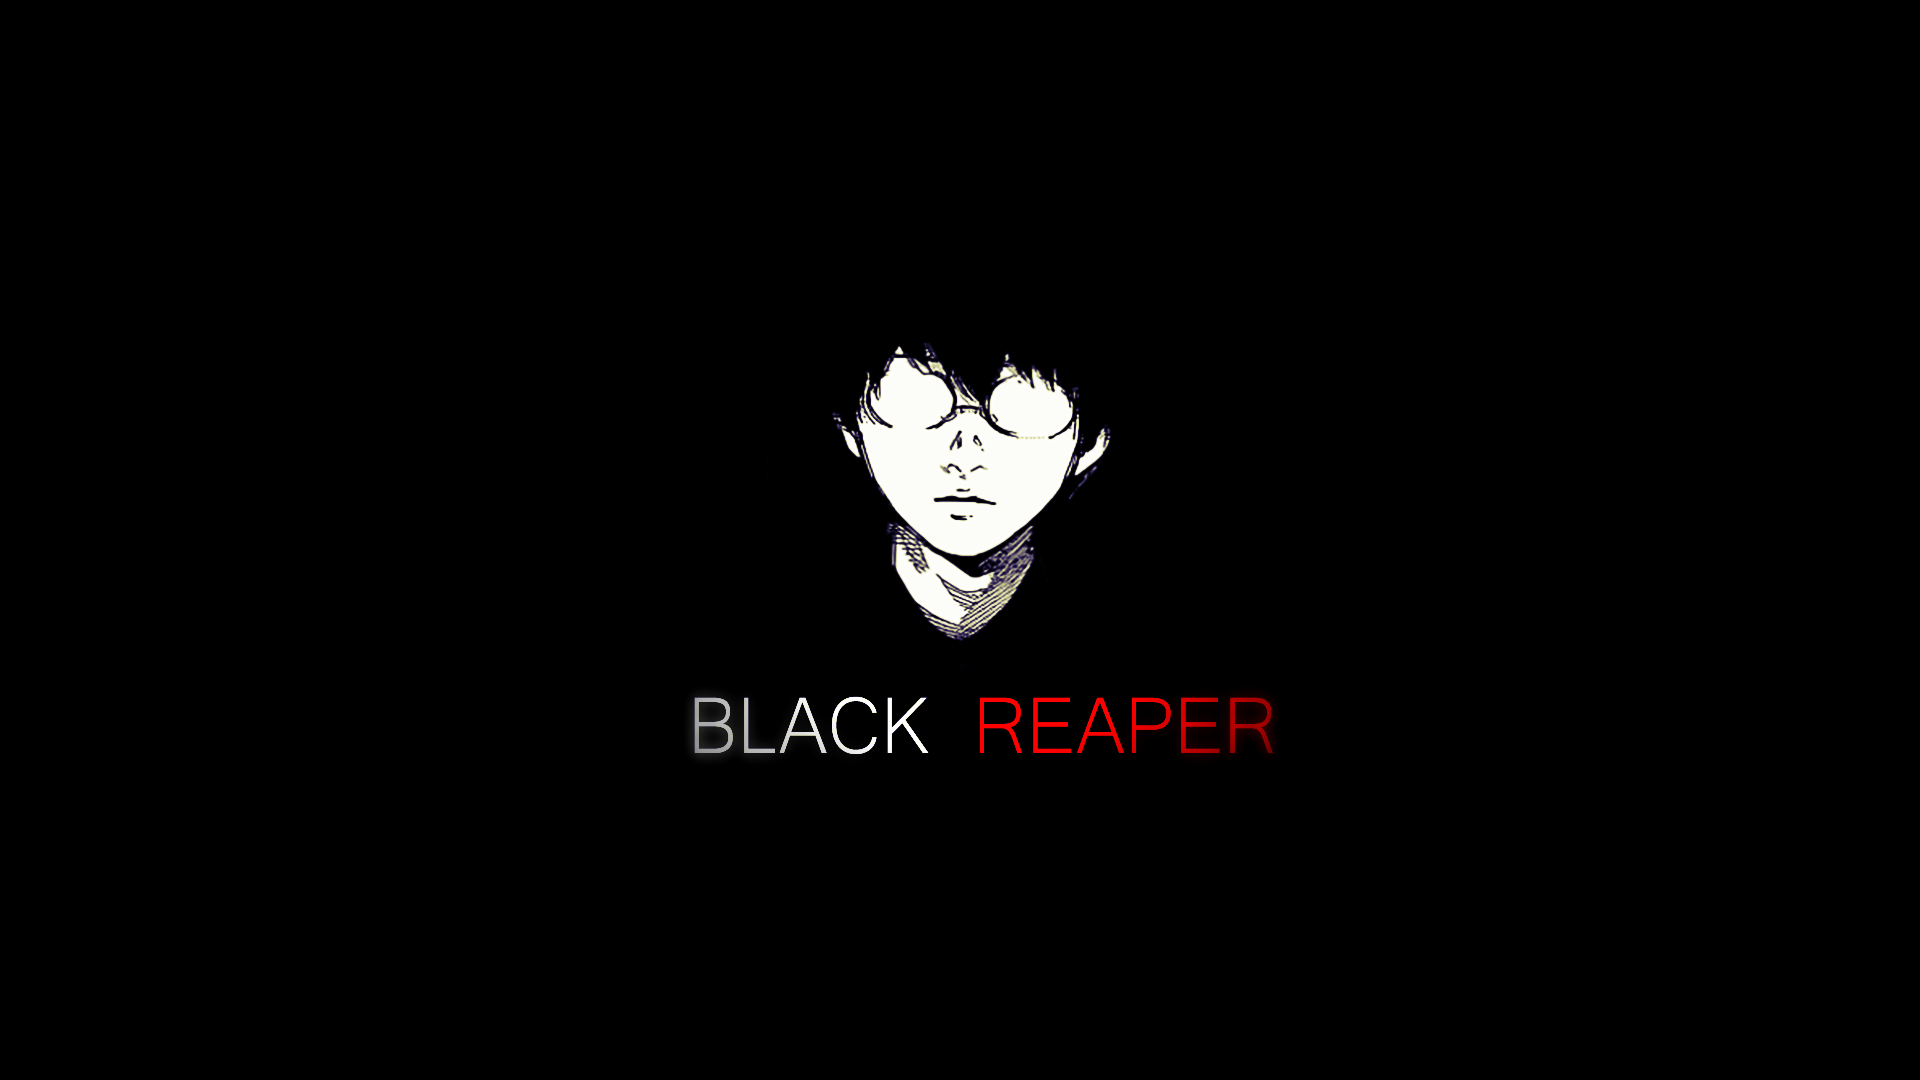 Kaneki Black Reaper Wallpaper, HD Anime 4K Wallpapers, Images, Photos